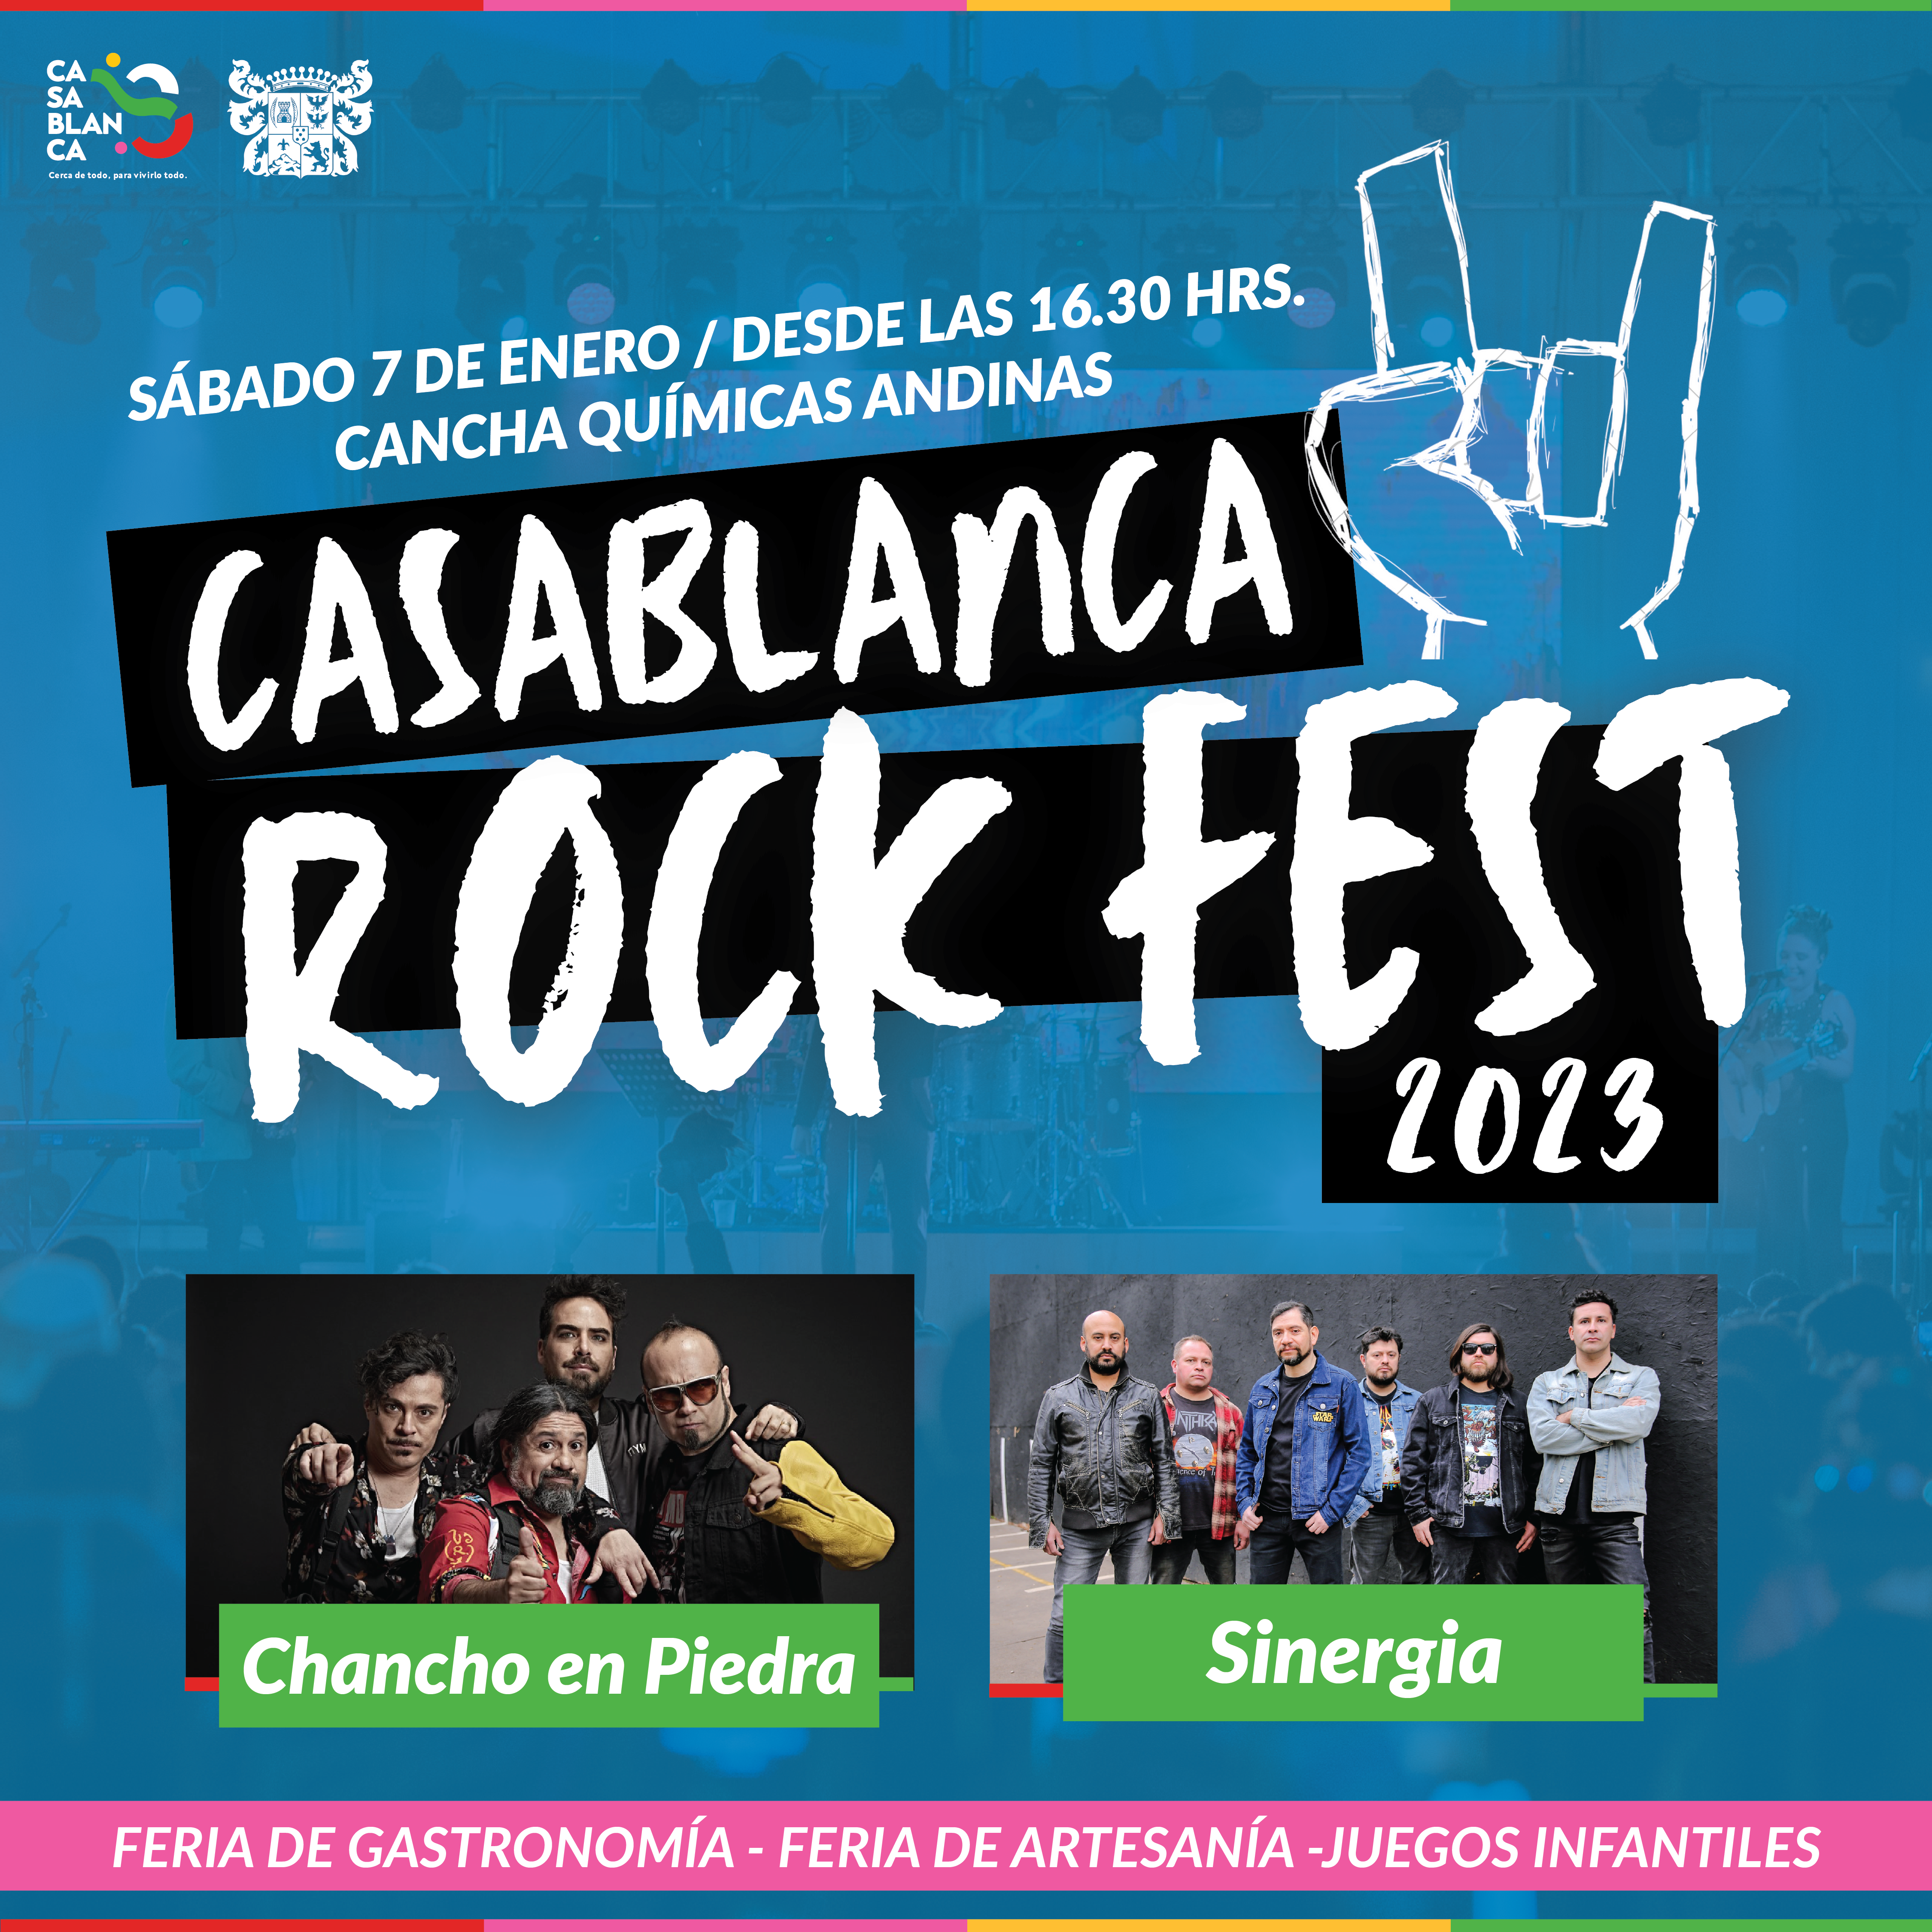 Rockfest 1